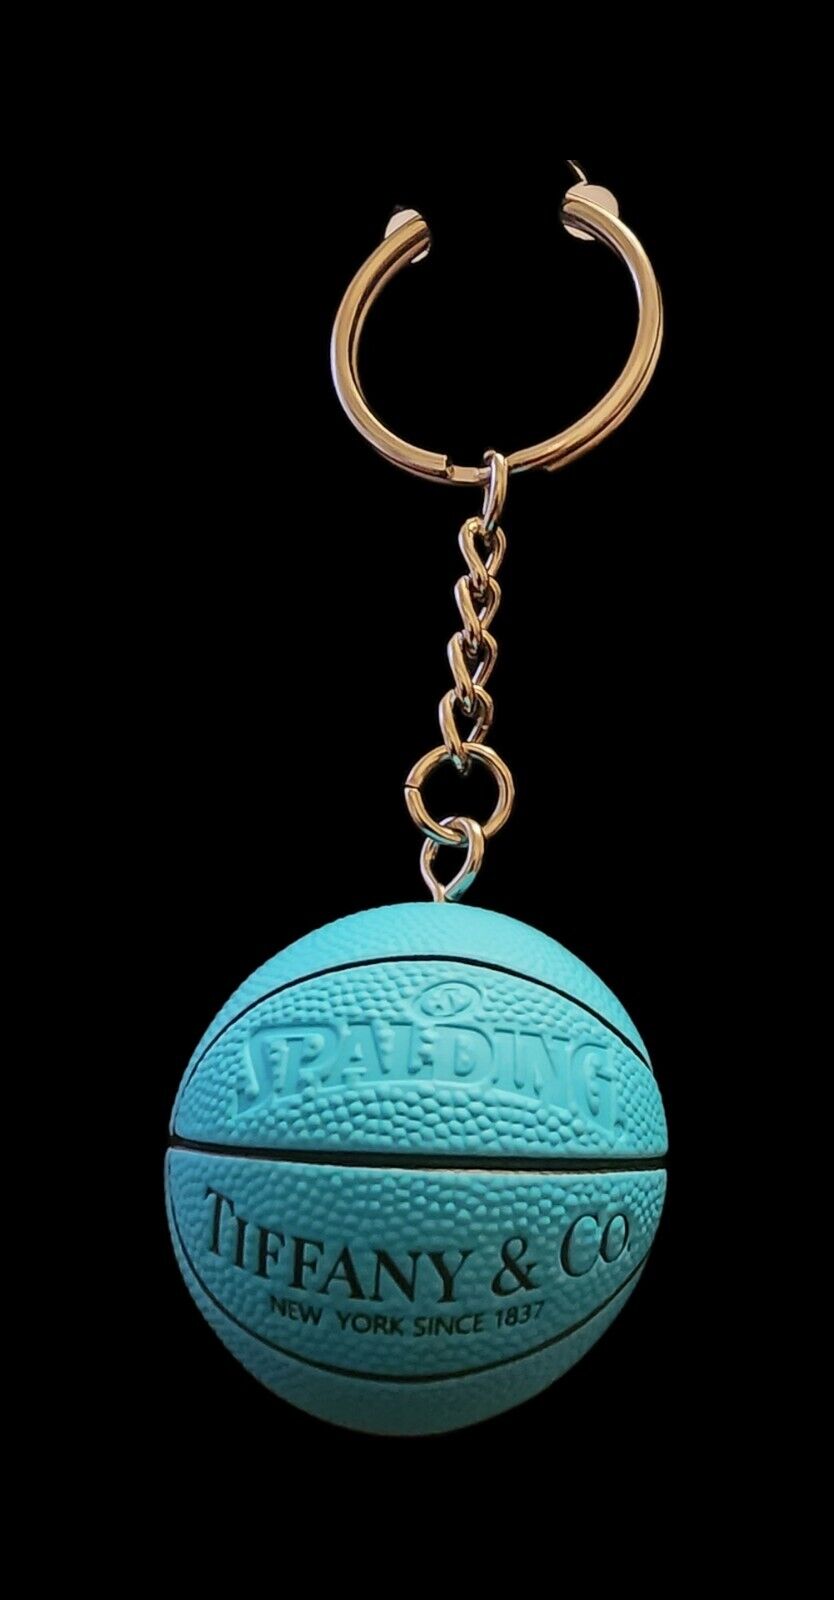 Tiffany & Co Basketball Keychain